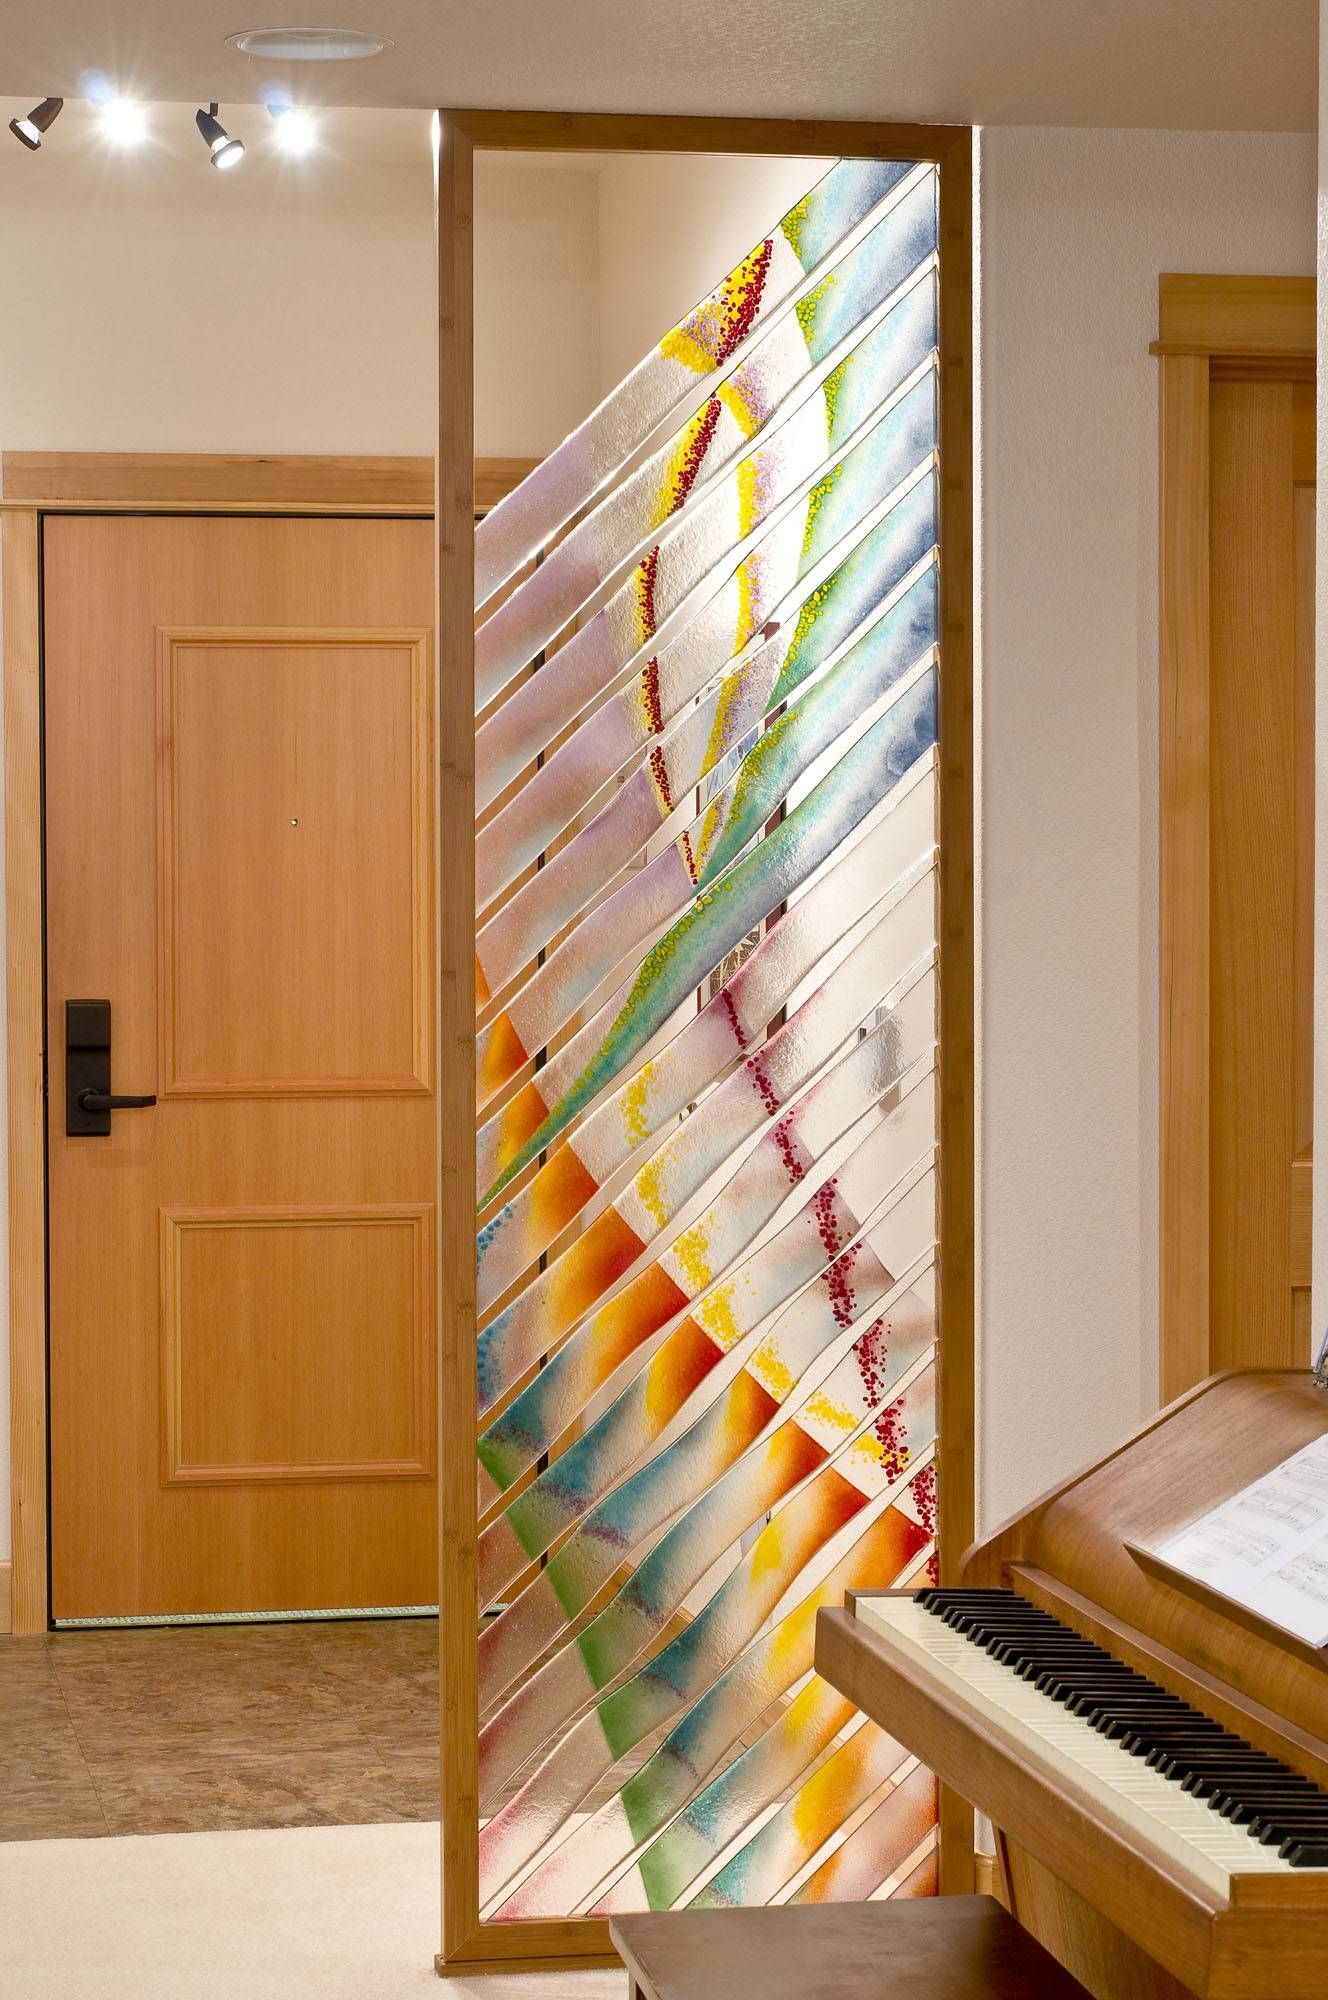 Fused Glass Art – Kate Macleod's Glass Art | Kate Macleod's Glass Art Intended For 2018 Fused Glass Wall Art Panels (View 13 of 25)